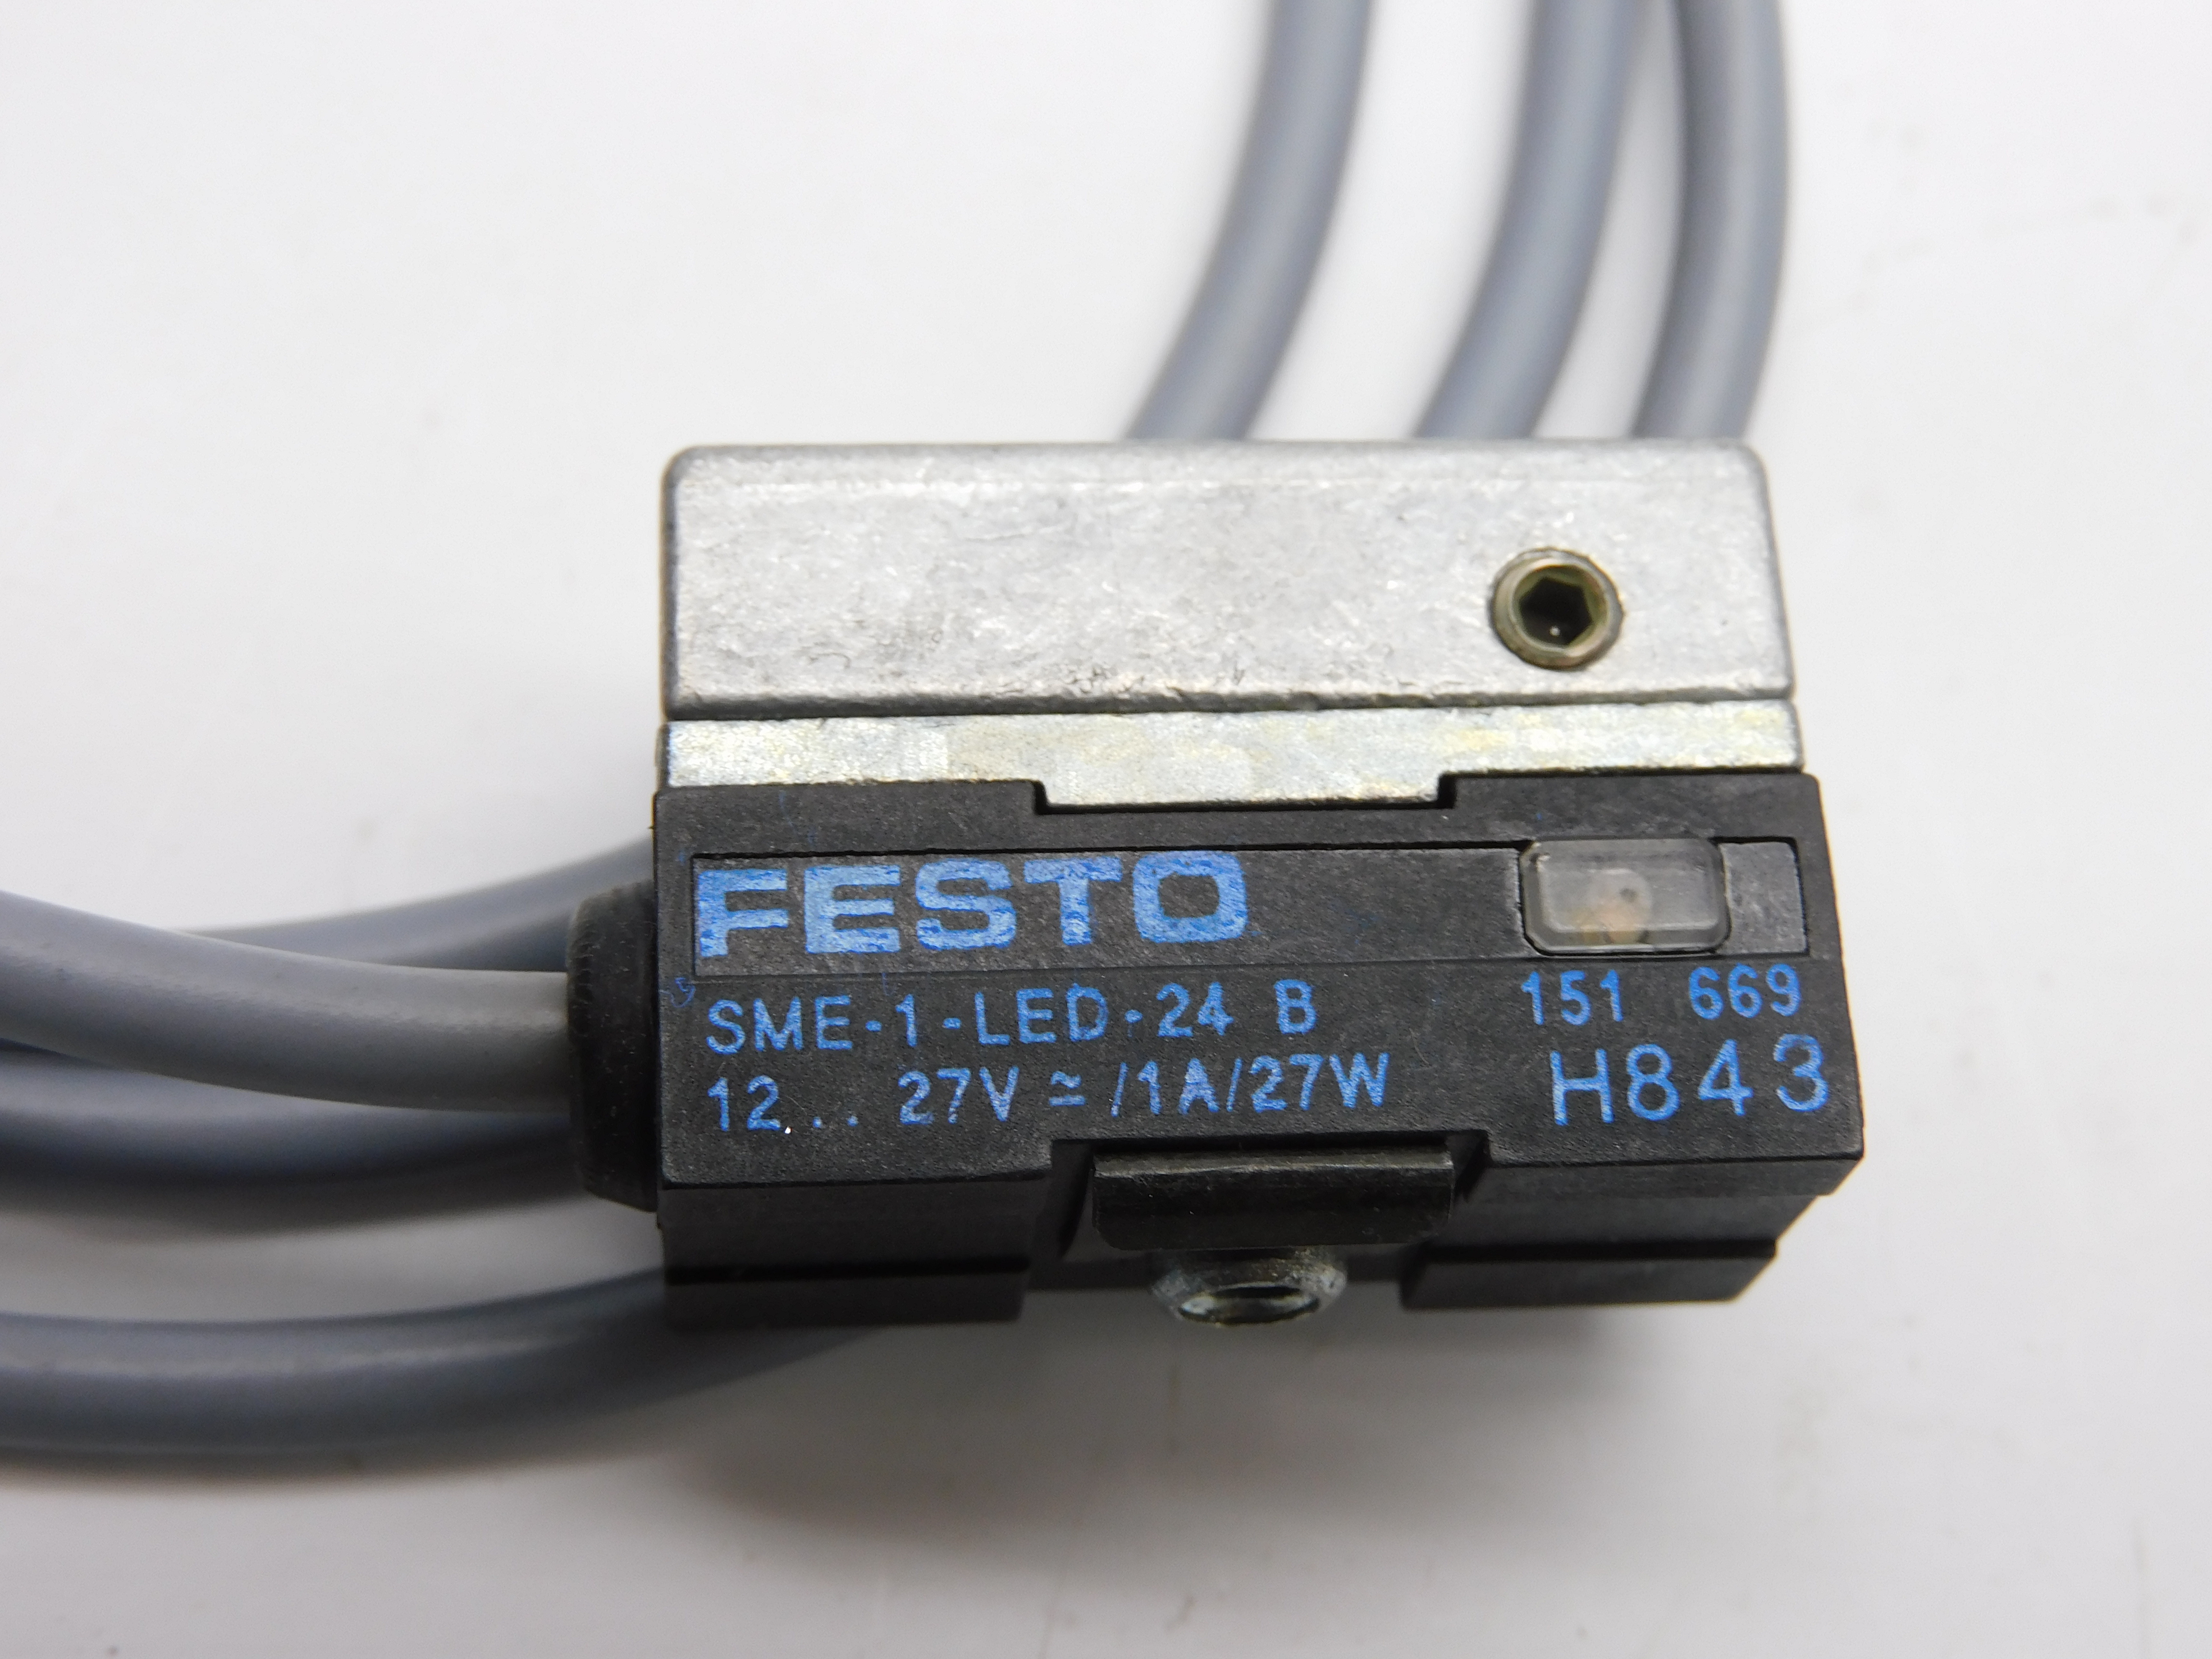 FESTO SME-1-LED-24B 151669 SER. H843 NSNP | eBay